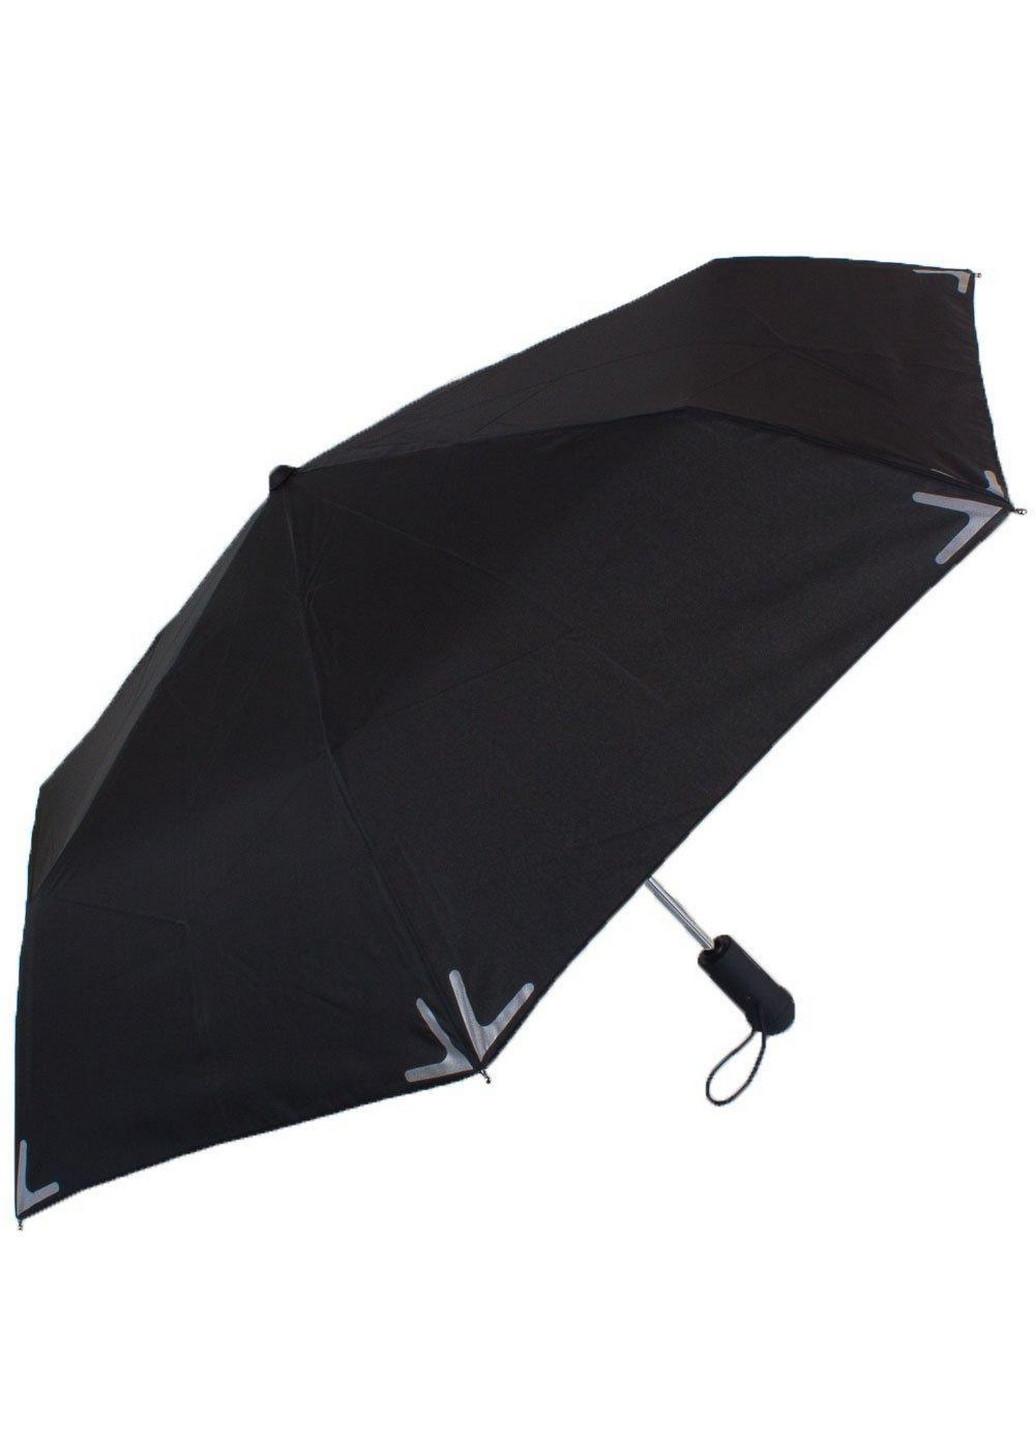 Мужской складной зонт автомат 96 см FARE (260330370)